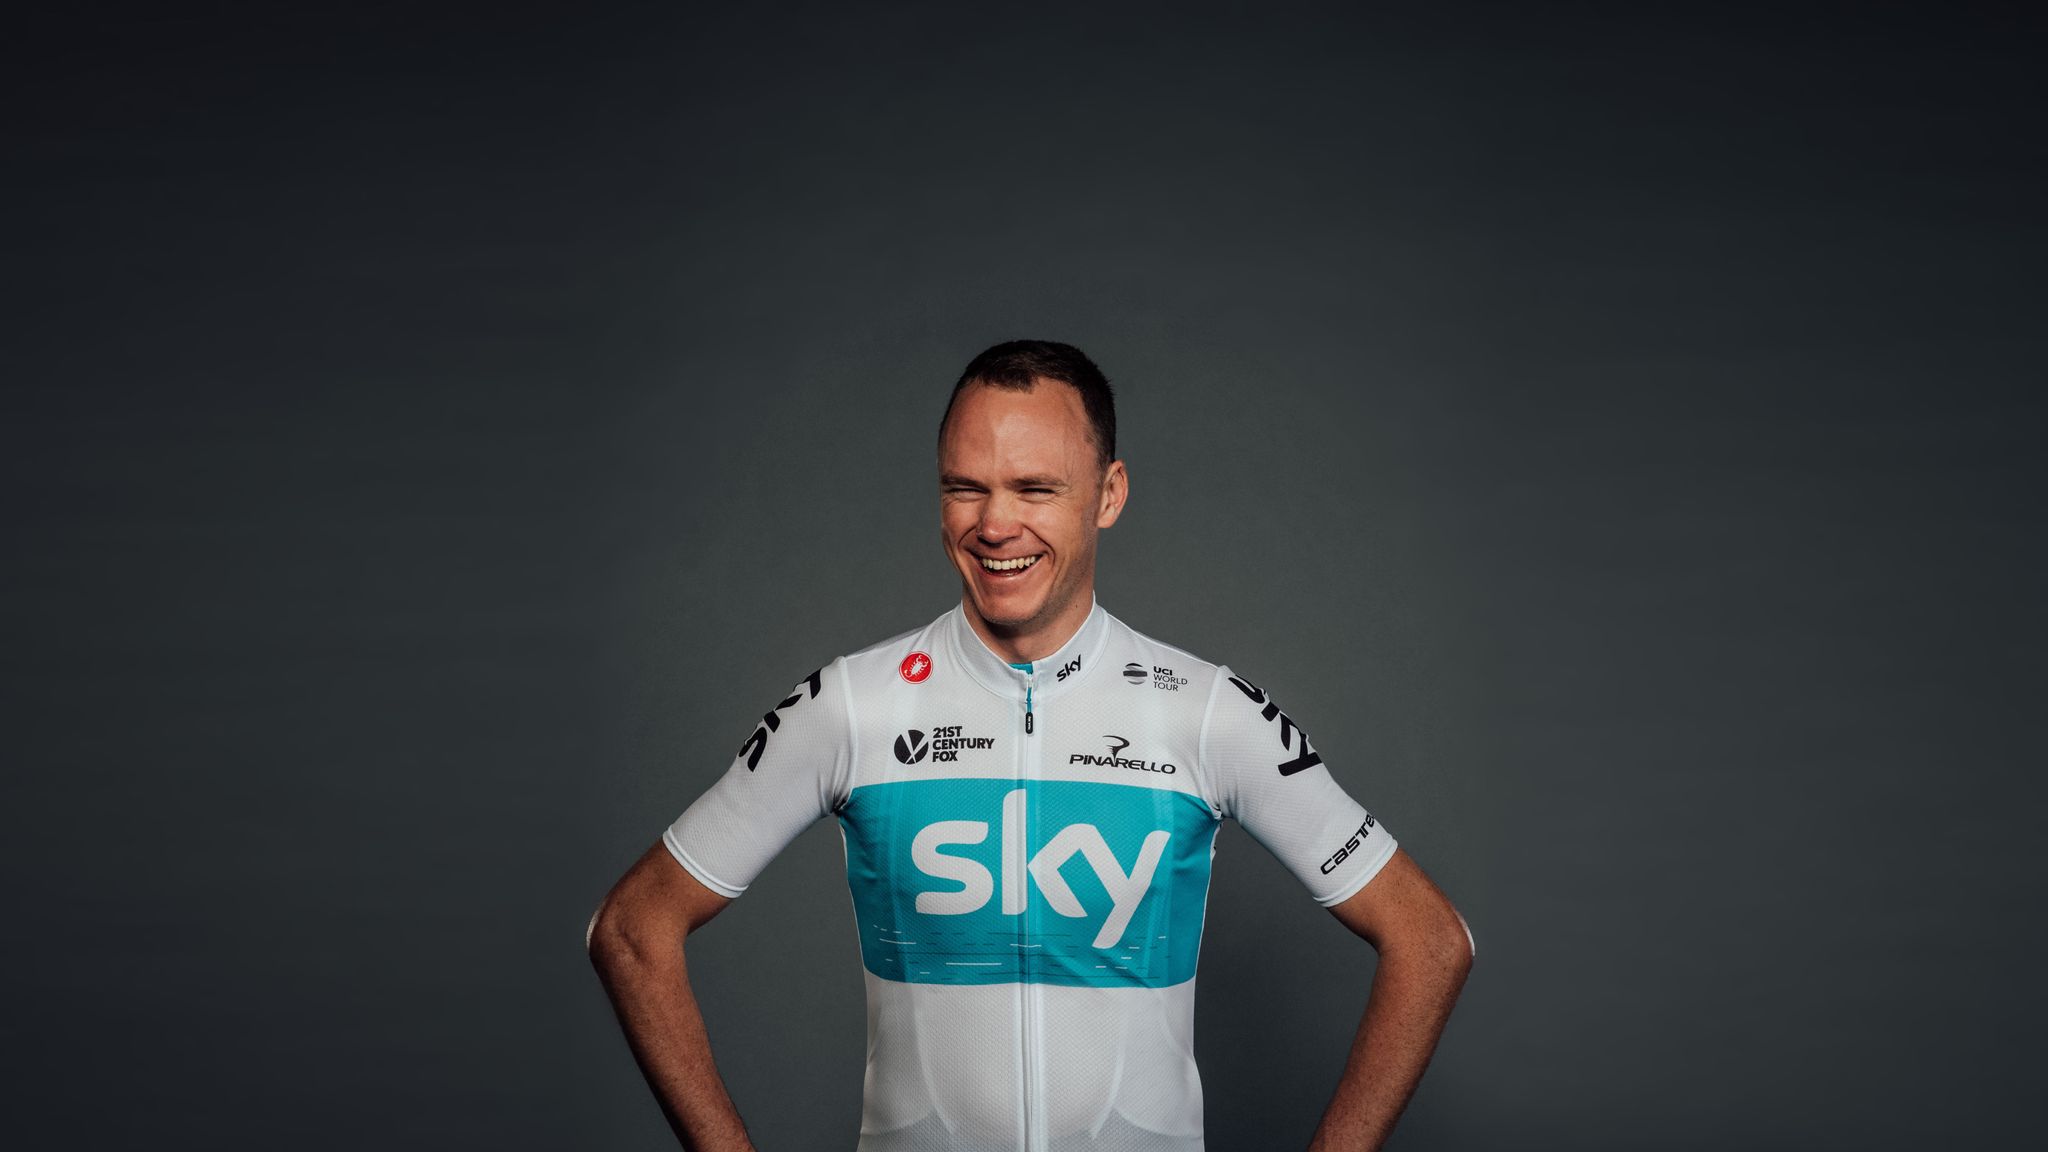 Afbreken leven hulp in de huishouding Team Sky unveil new kit ahead of the 2018 season | Cycling News | Sky Sports